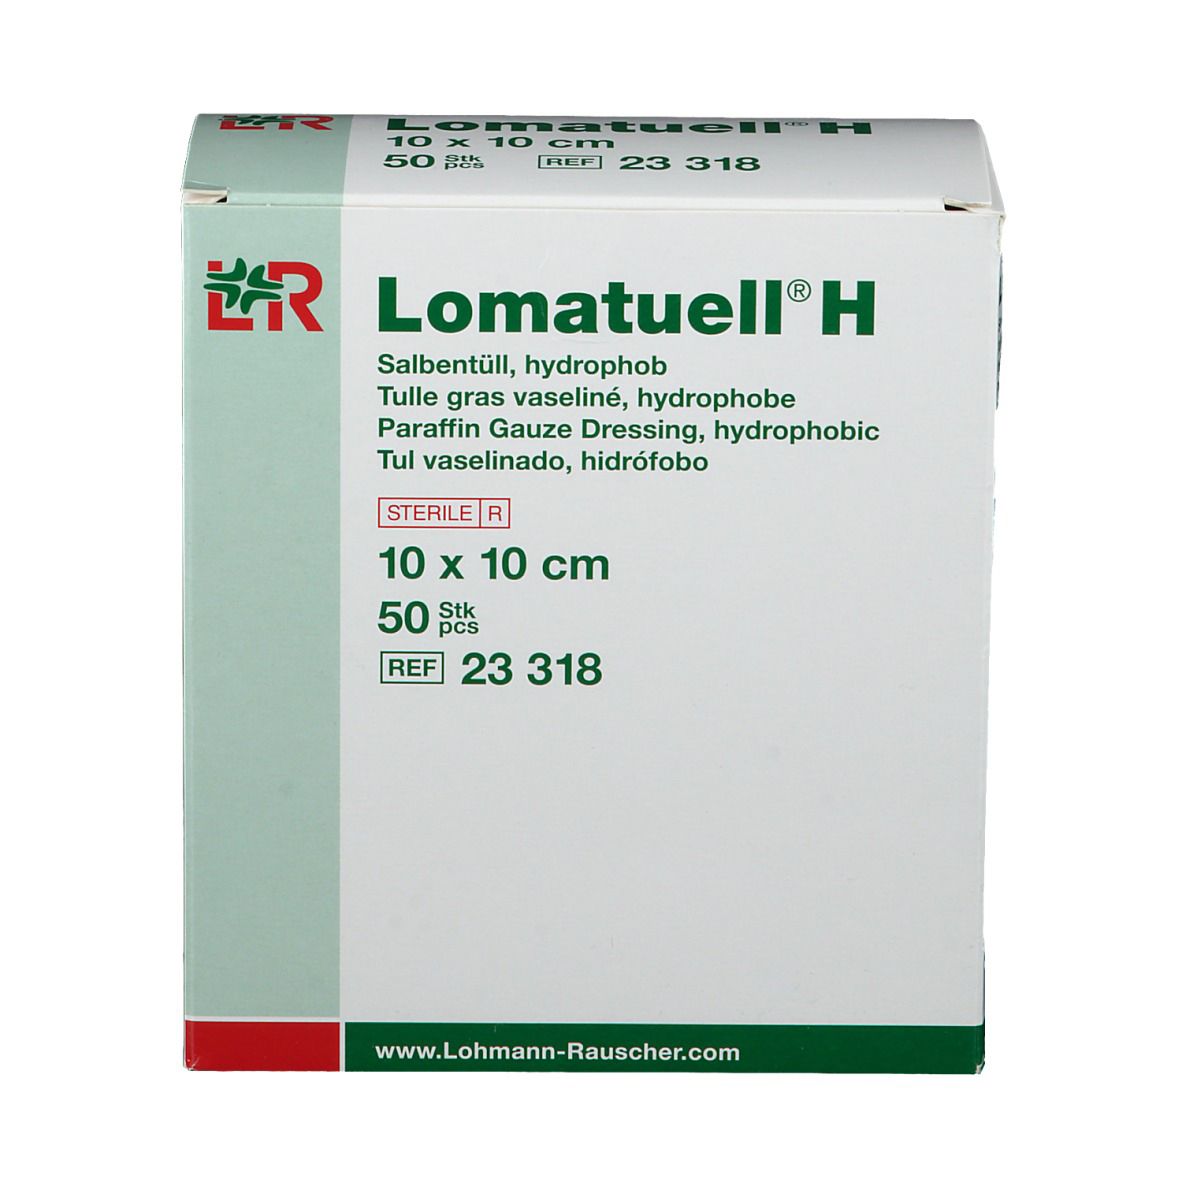 Lomatuell® H 10 cm x 10 cm steril